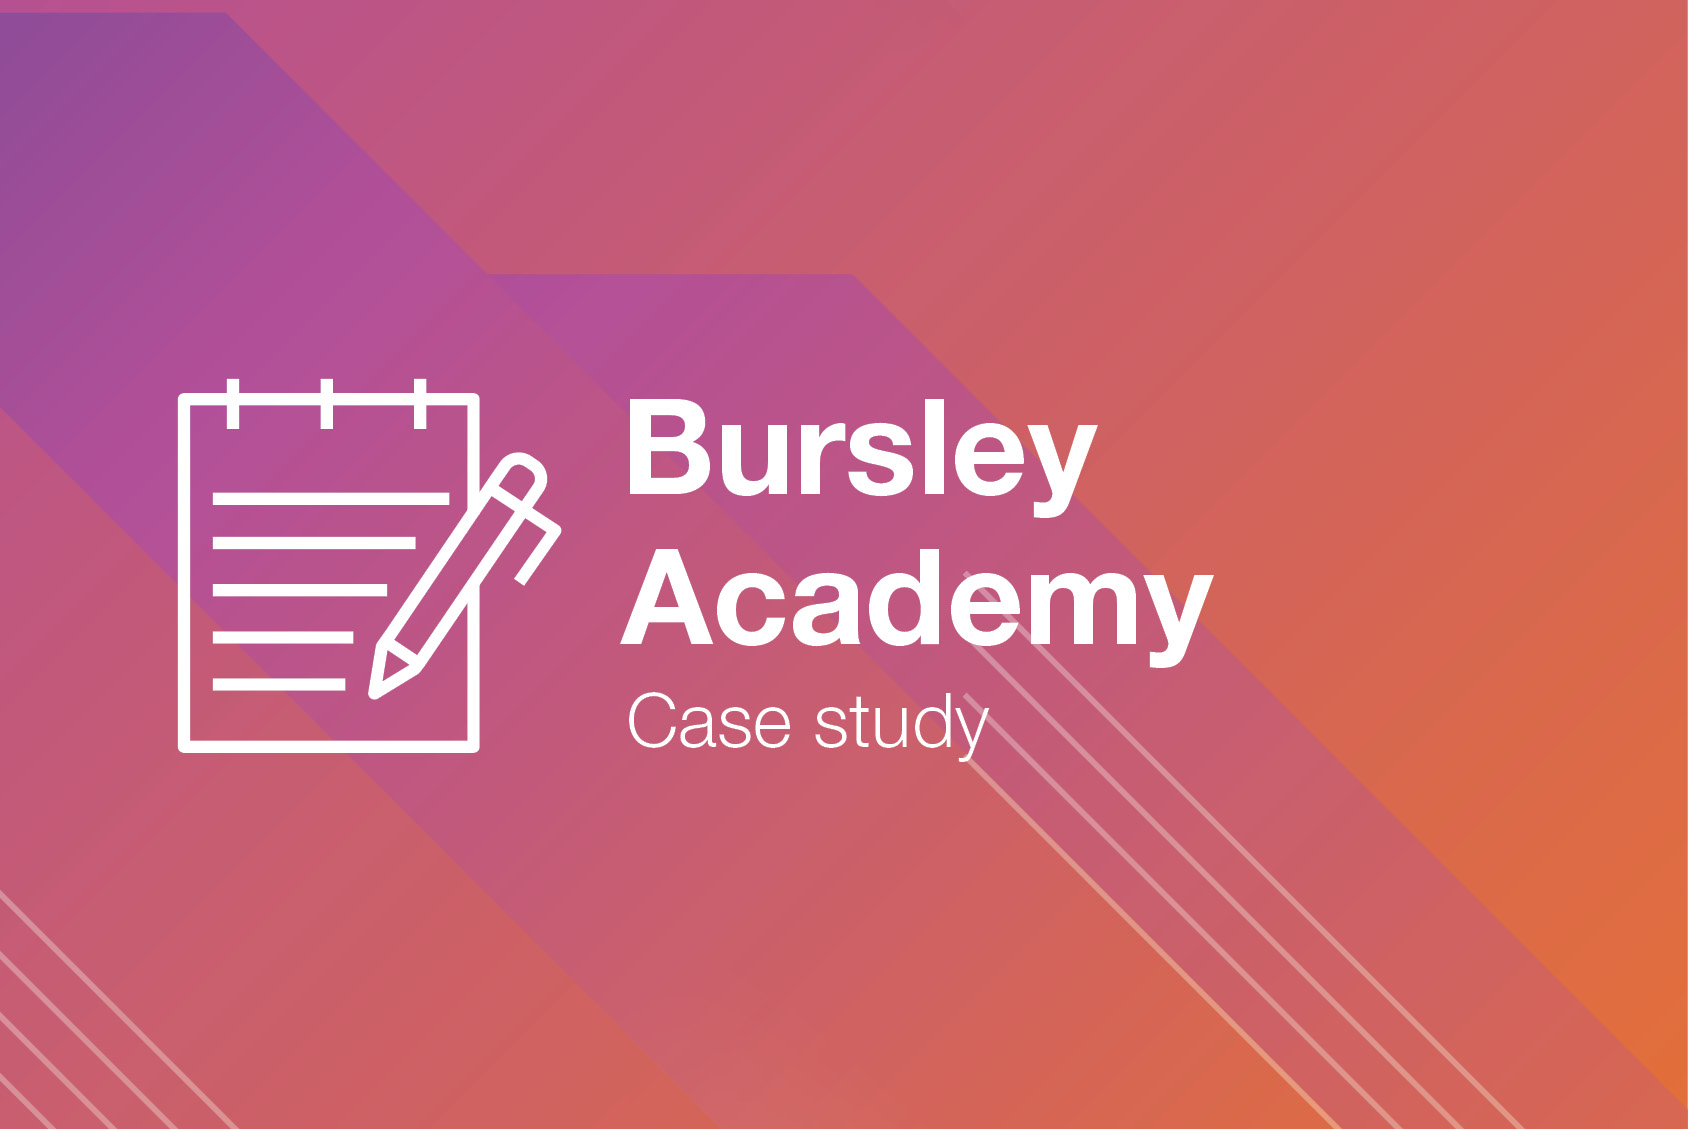 Case study - Bursley Academy